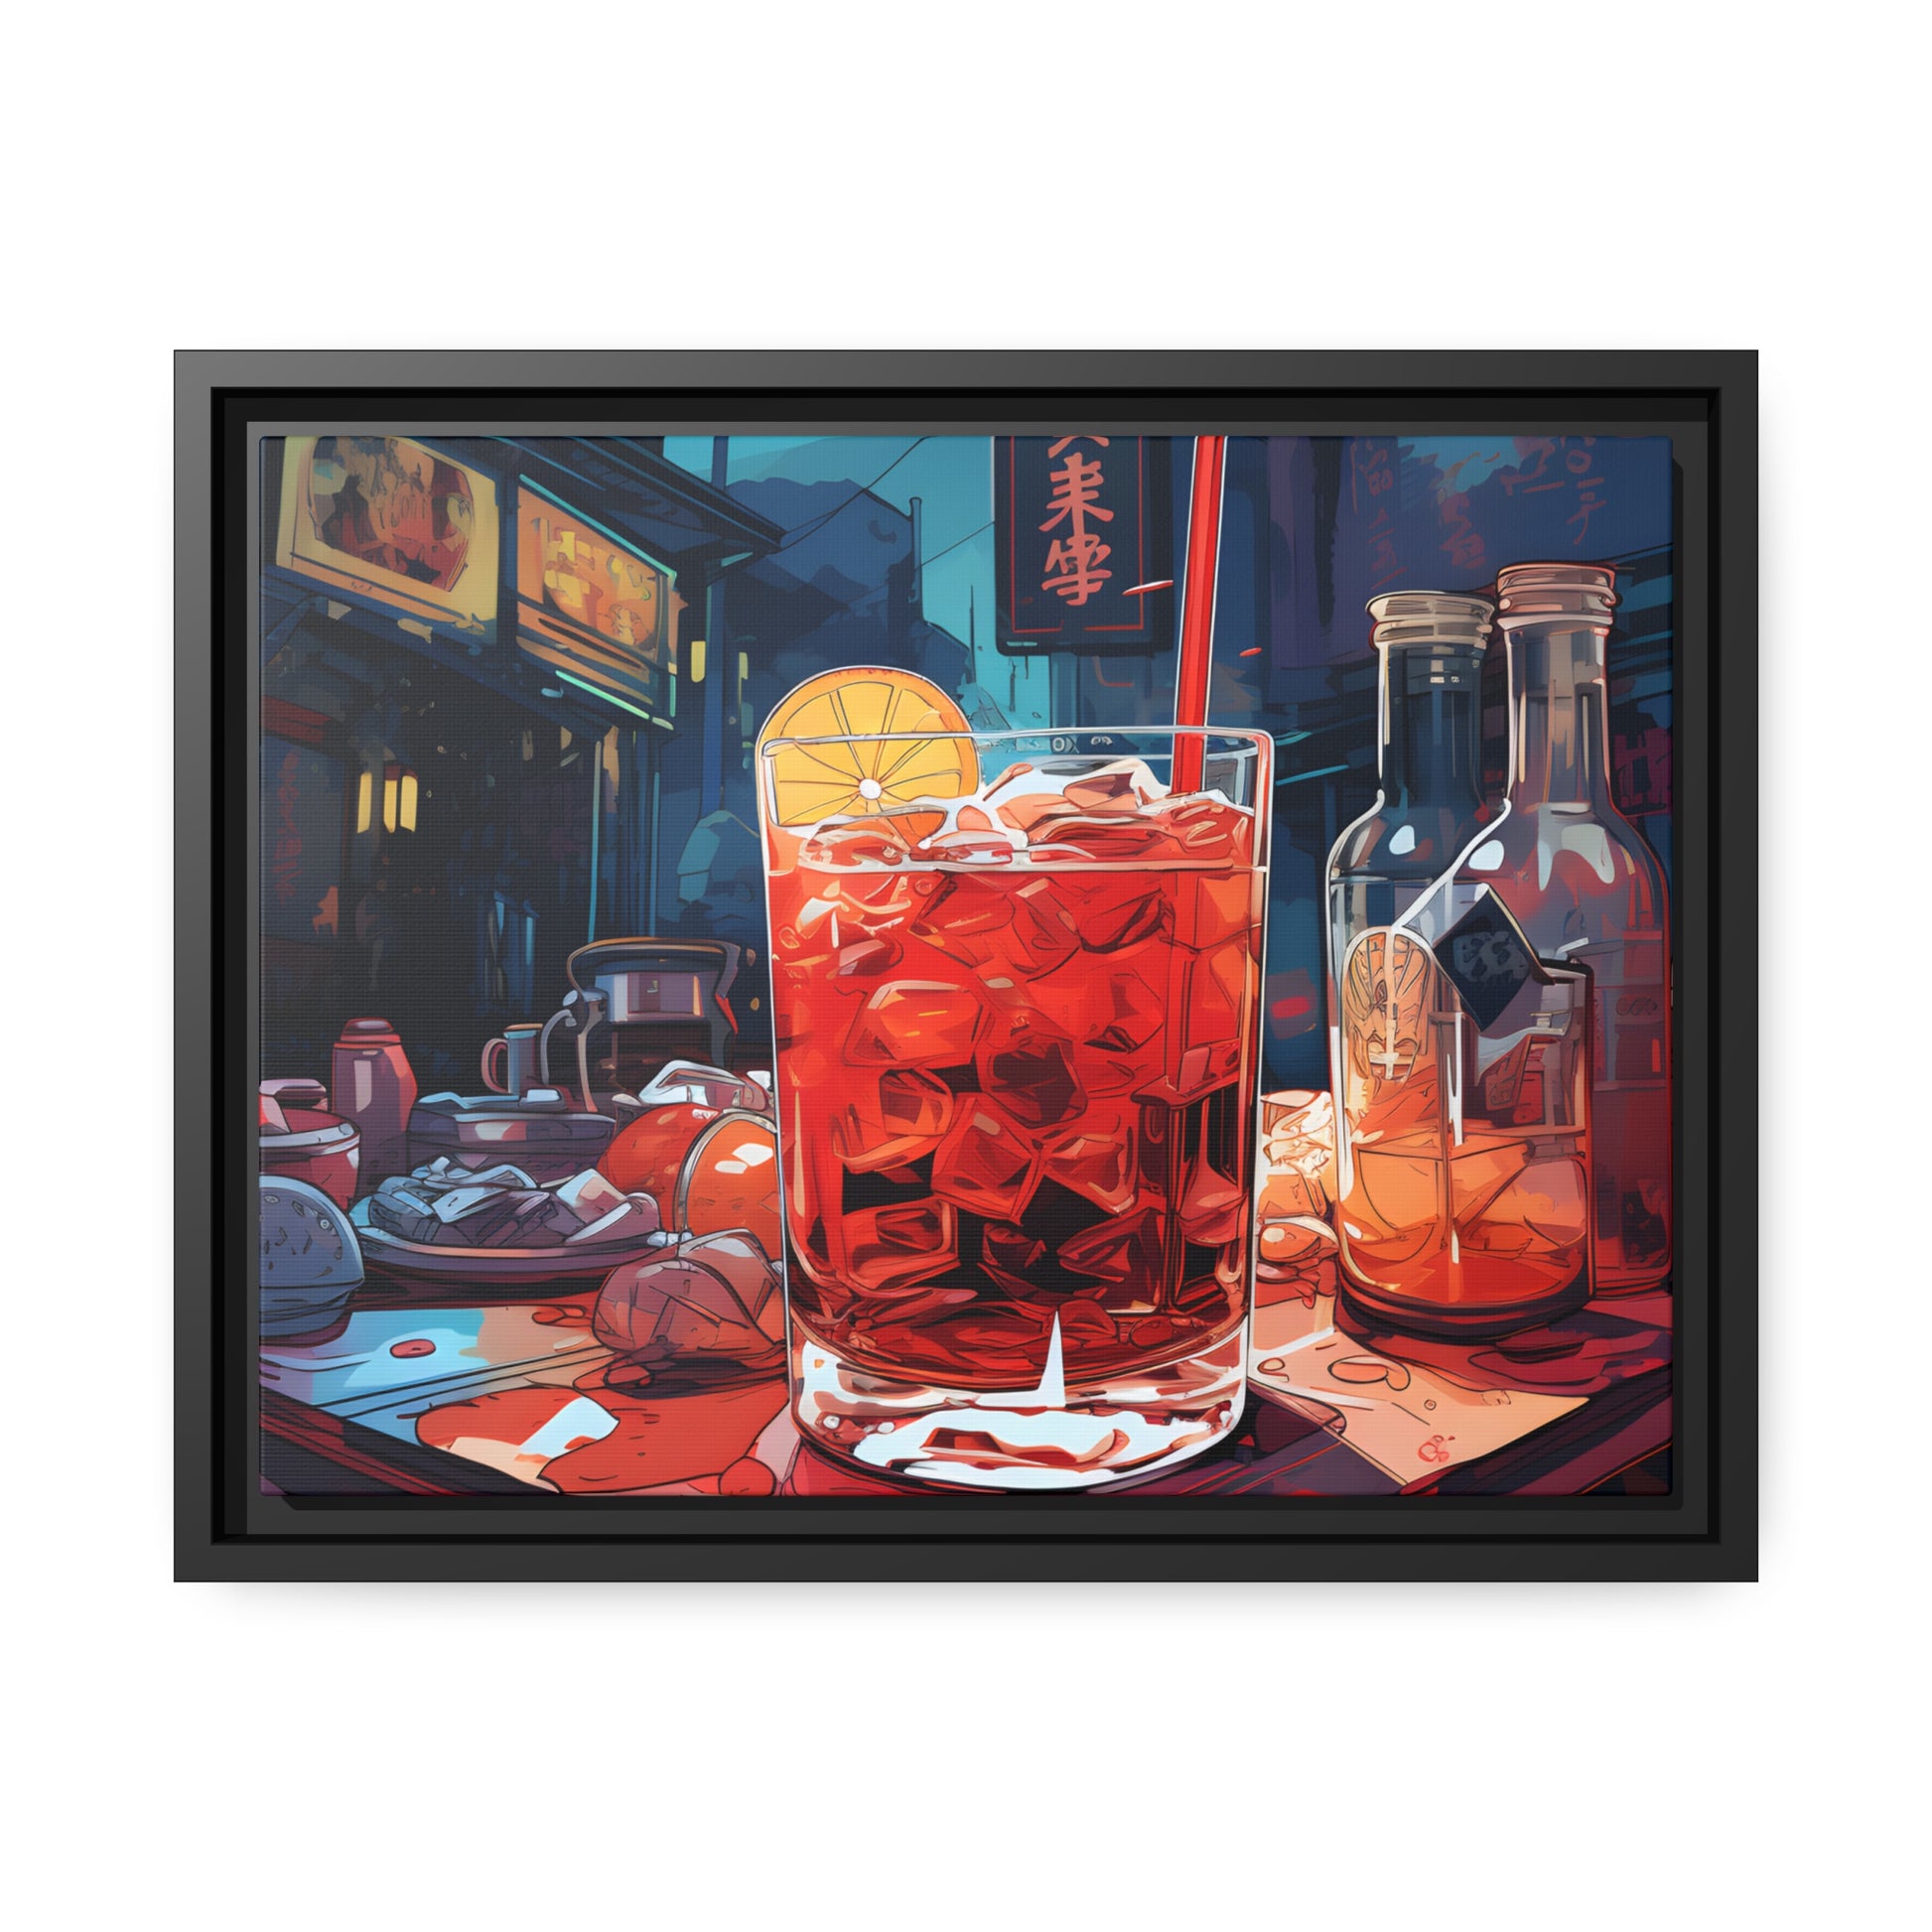 Framed Canvas Artwork Japanese Manga Style Alcohol And Night Life Bar Art Alcoholic Drink With Ice And Lemon Slice Floating Frame Canvas Neon Light Bar Artwork